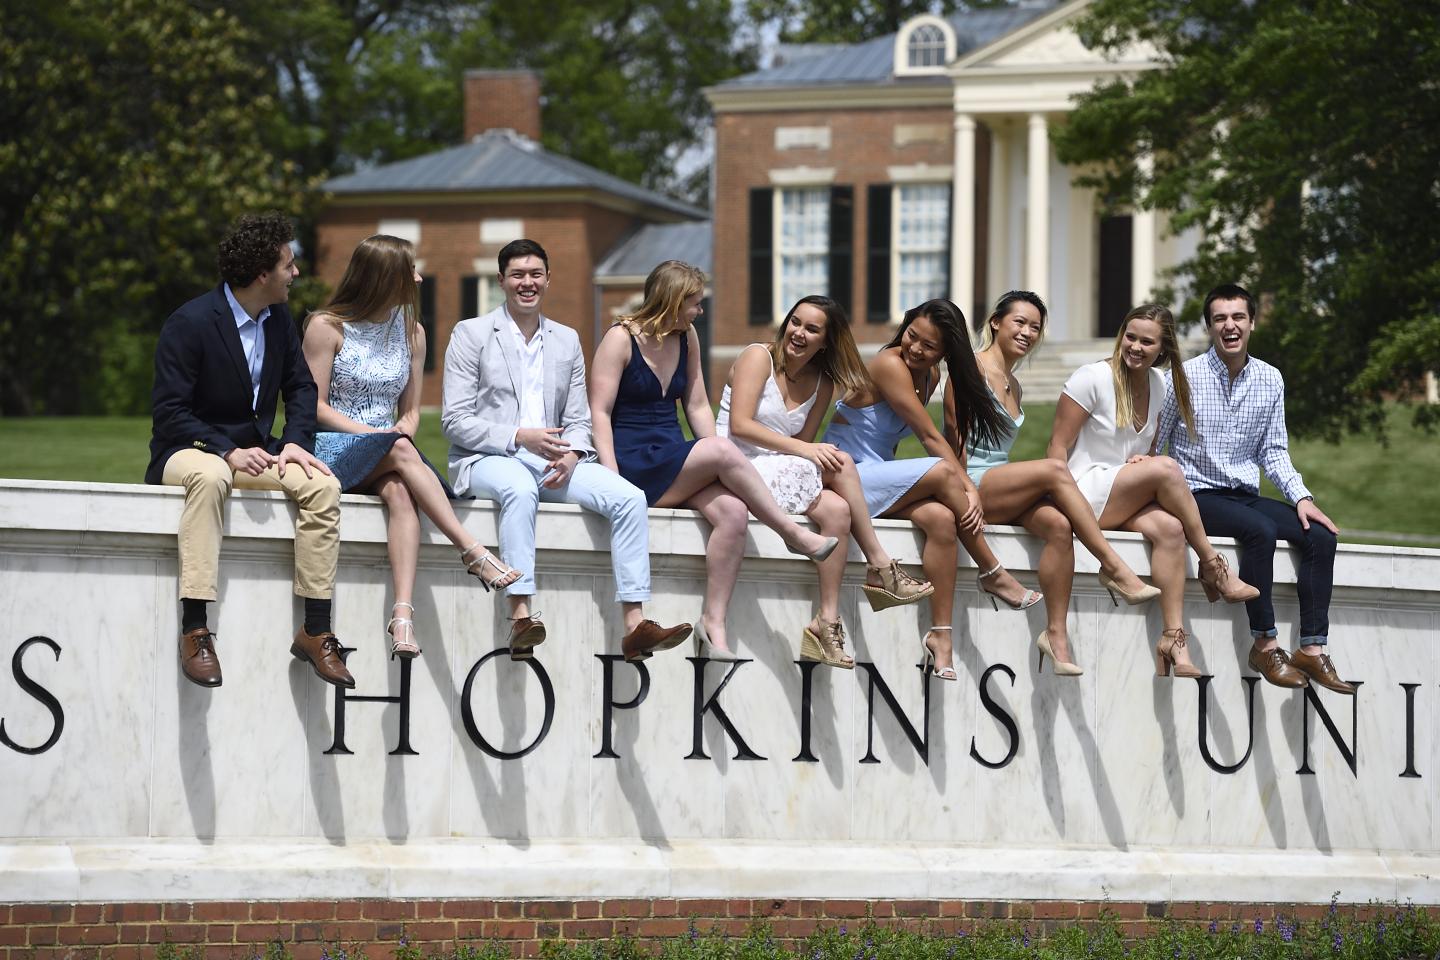 Seniors pose on the Johns Hopkins wall sign